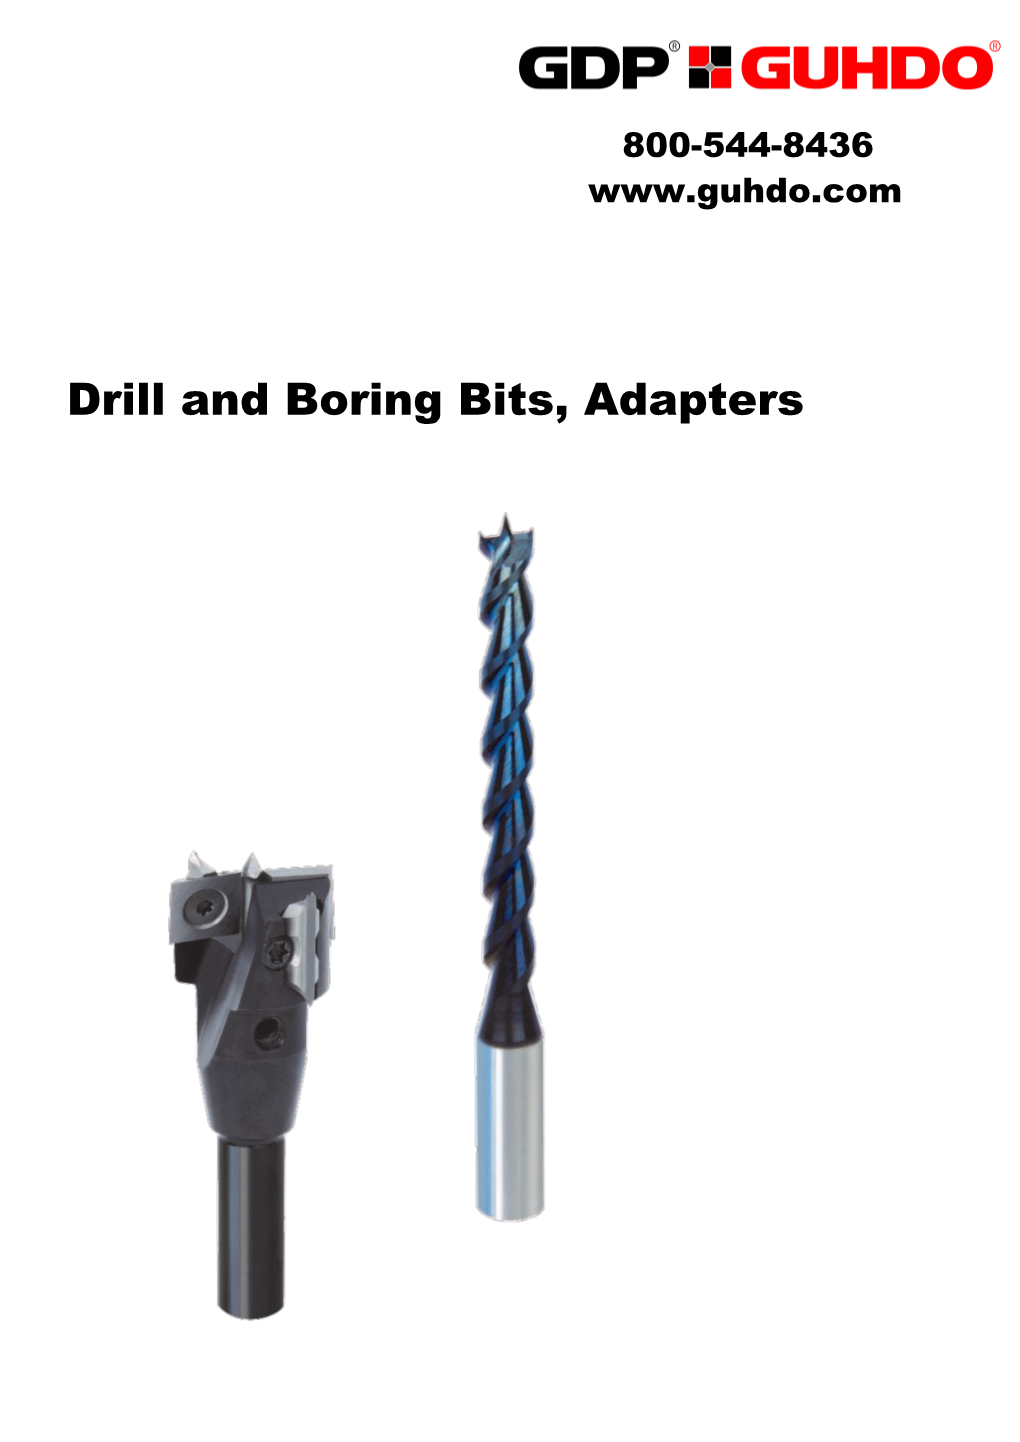 Drill Bits/Adapters